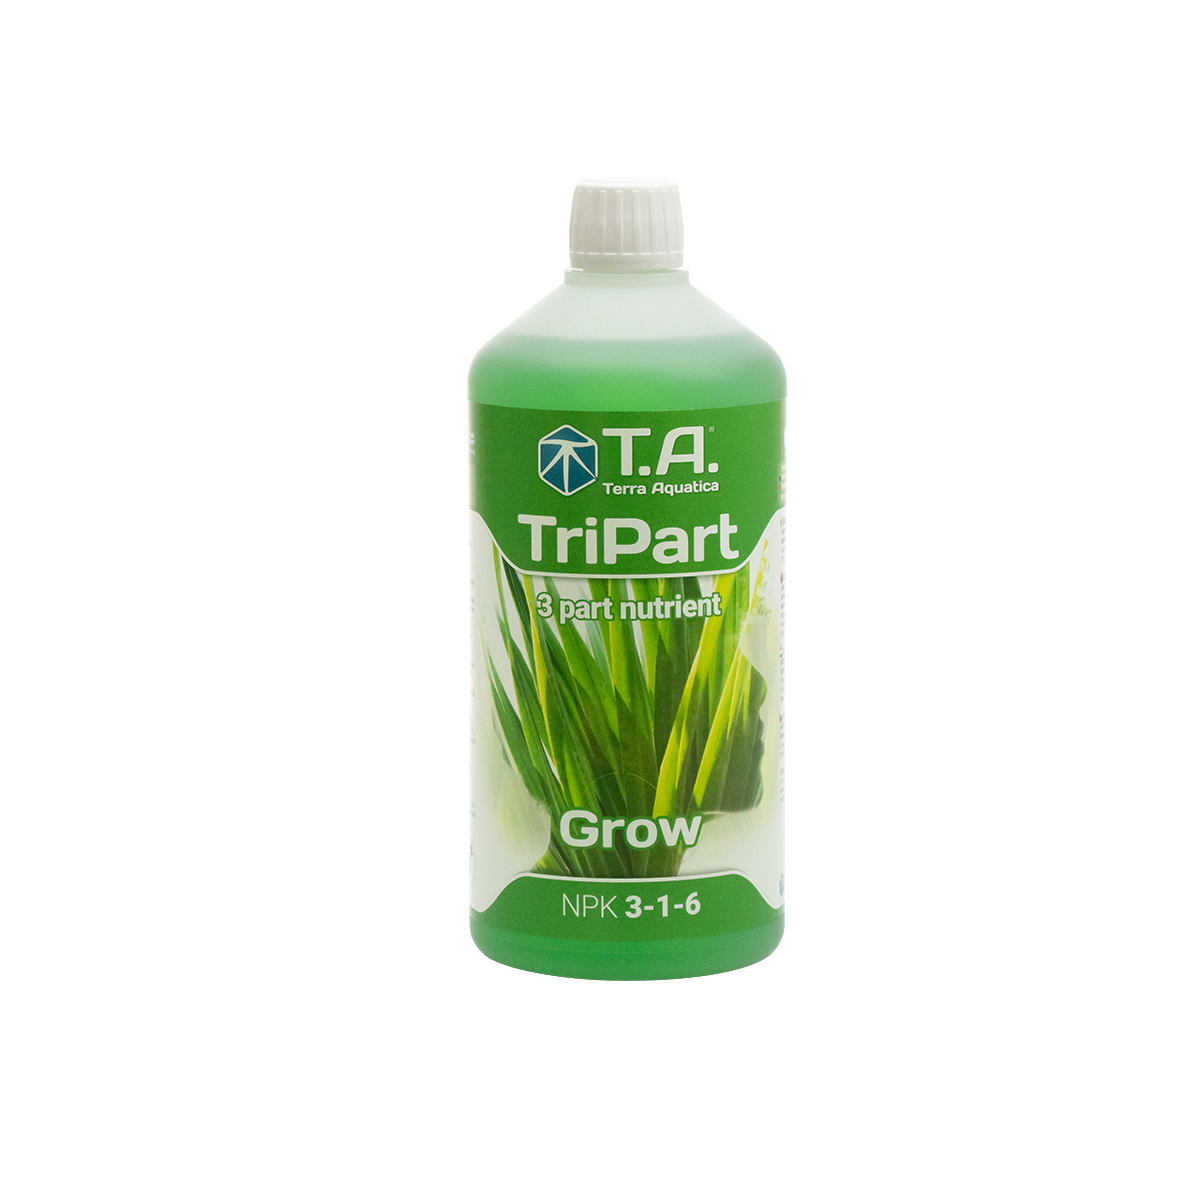 Tripart grow 1 litre